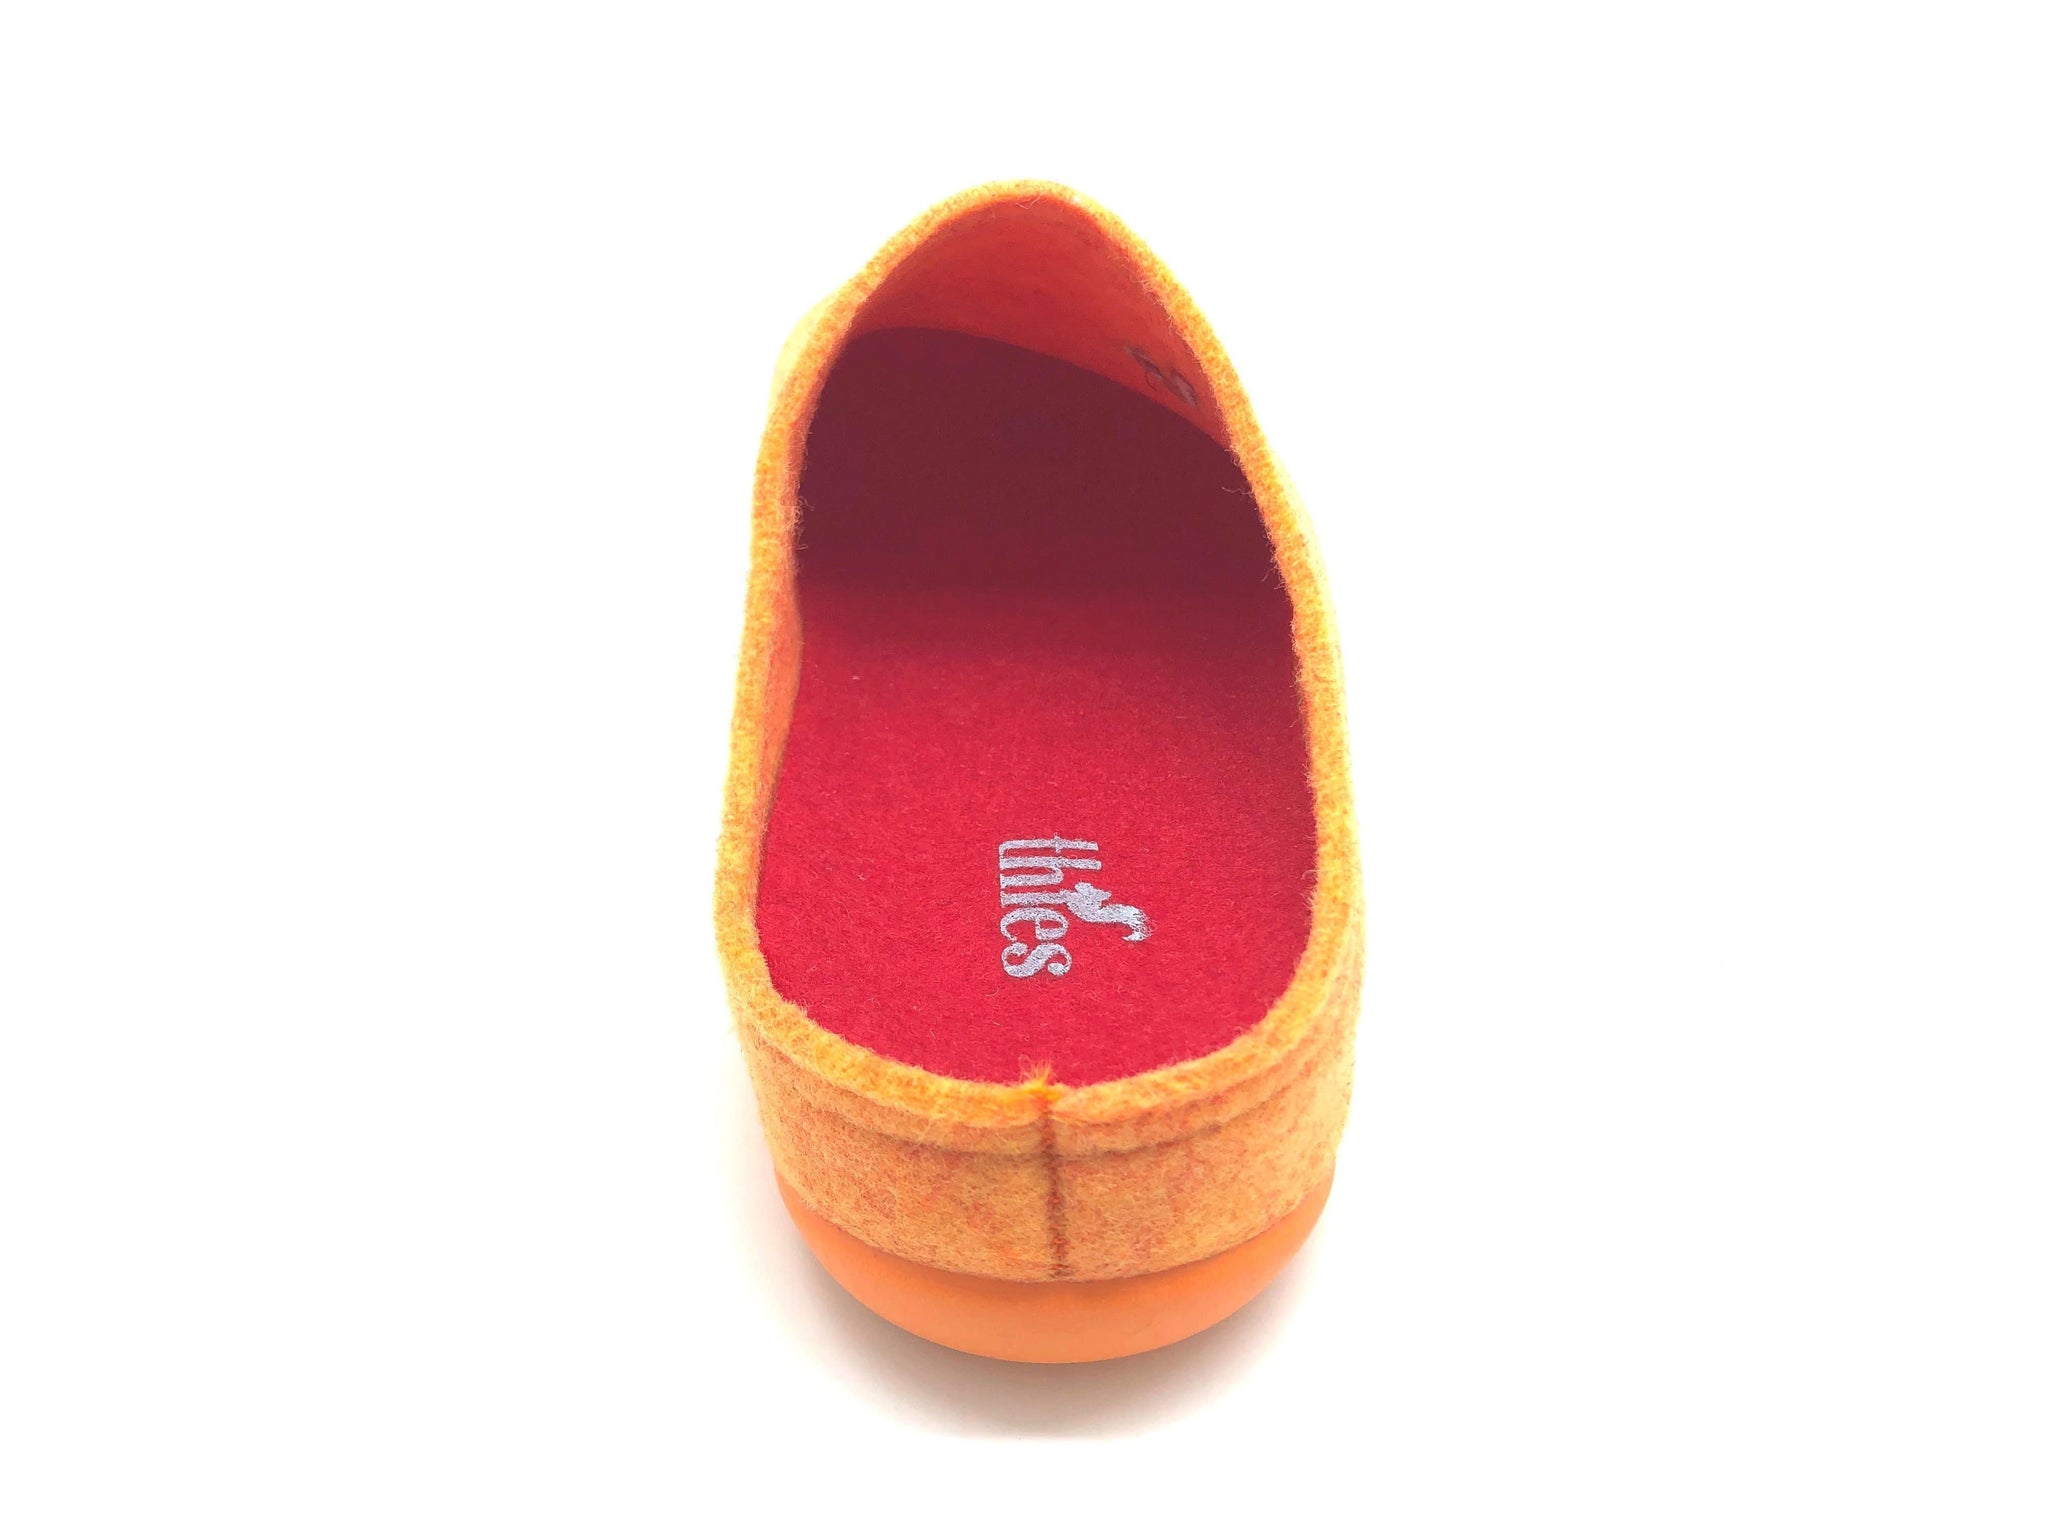 NAT 2 calzado thies 1856 ® Zapatilla de PET reciclado vegano naranja (W / M) moda sostenible moda ética